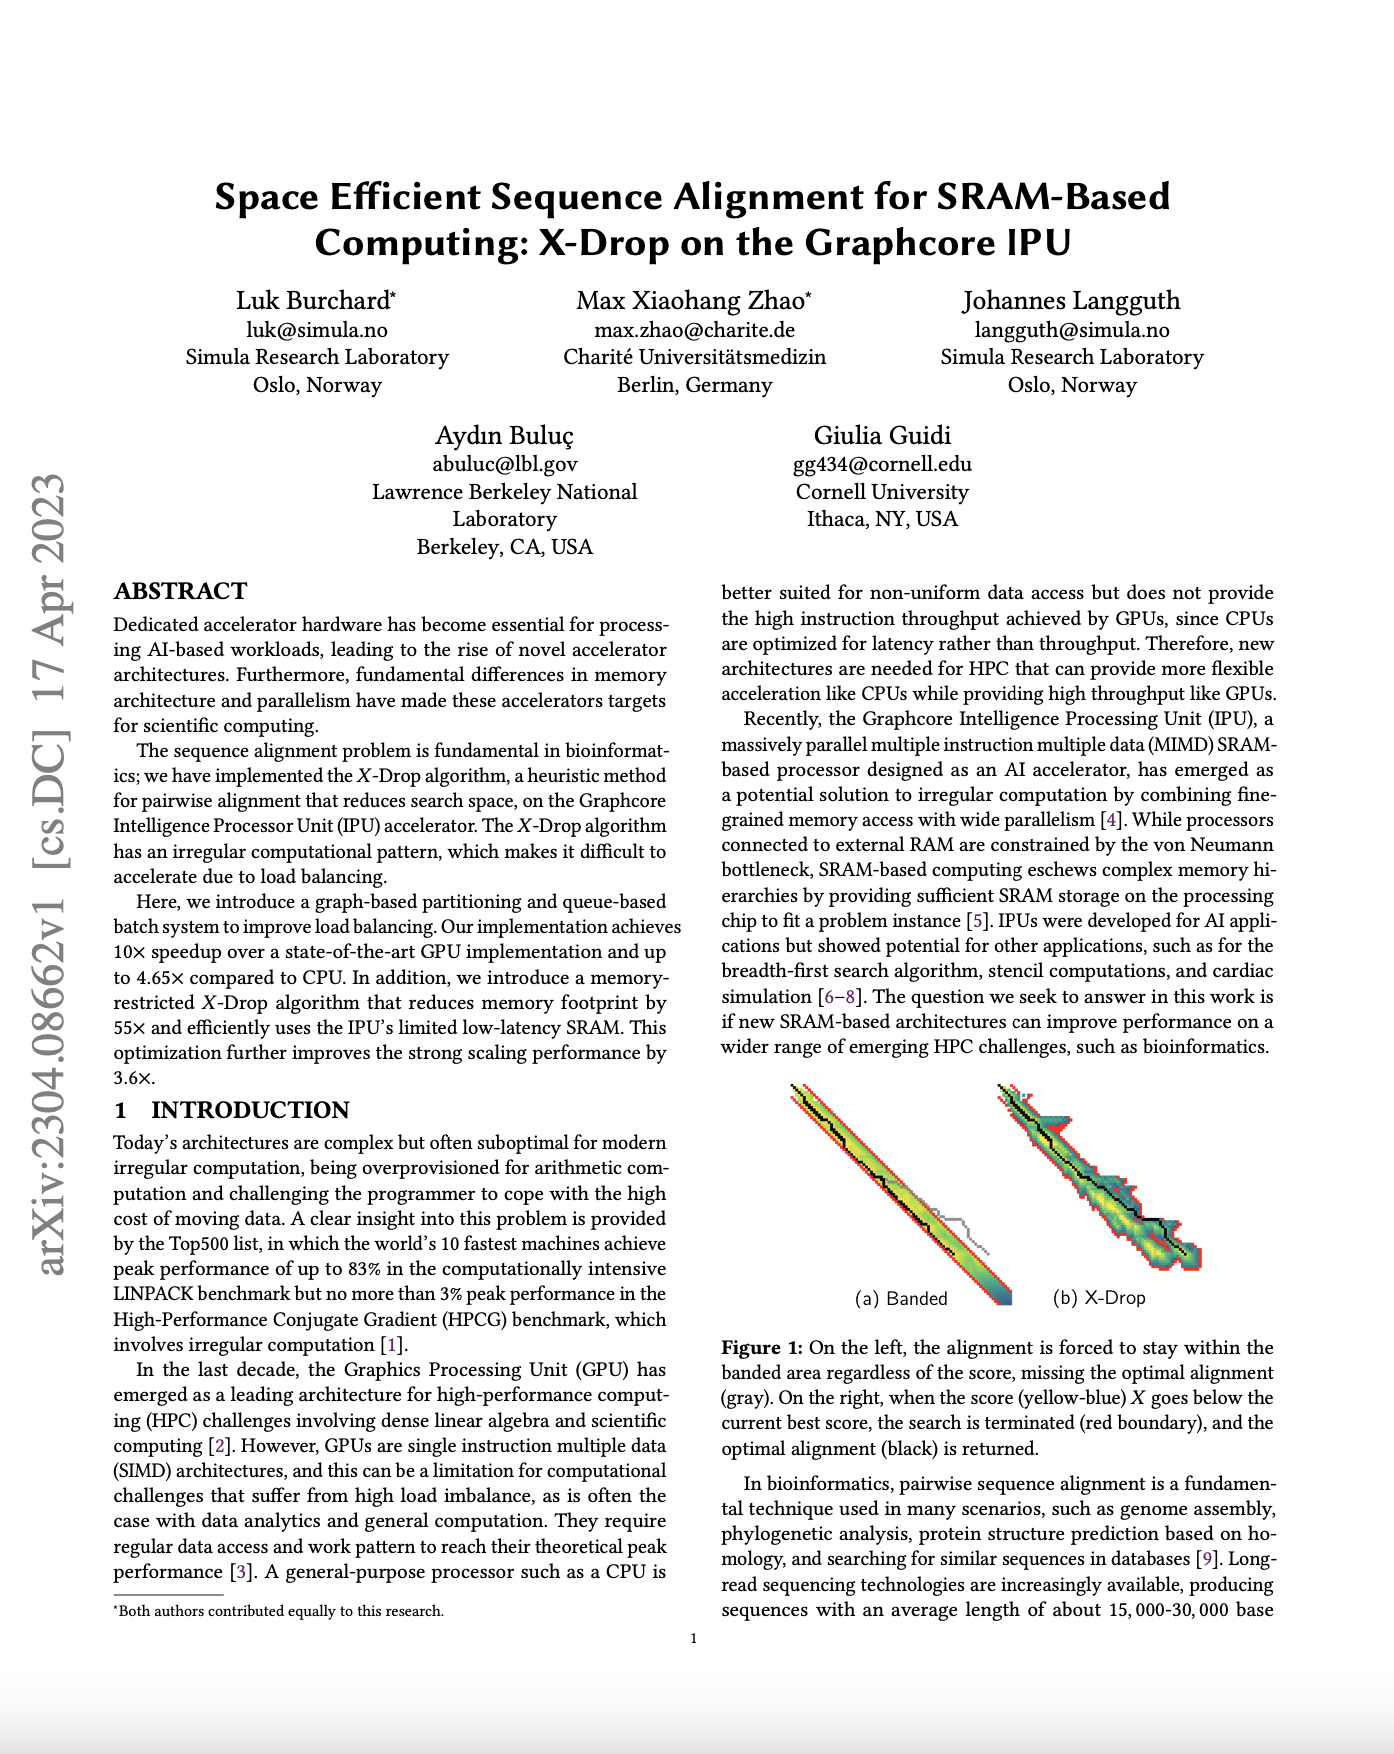 Charité Universitätsmedizin, Cornell University, Lawrence Berkeley National Laboratory, Simula Research: Space Efficient Sequence Alignment for SRAM-Based Computing: X-Drop on the Graphcore IPU